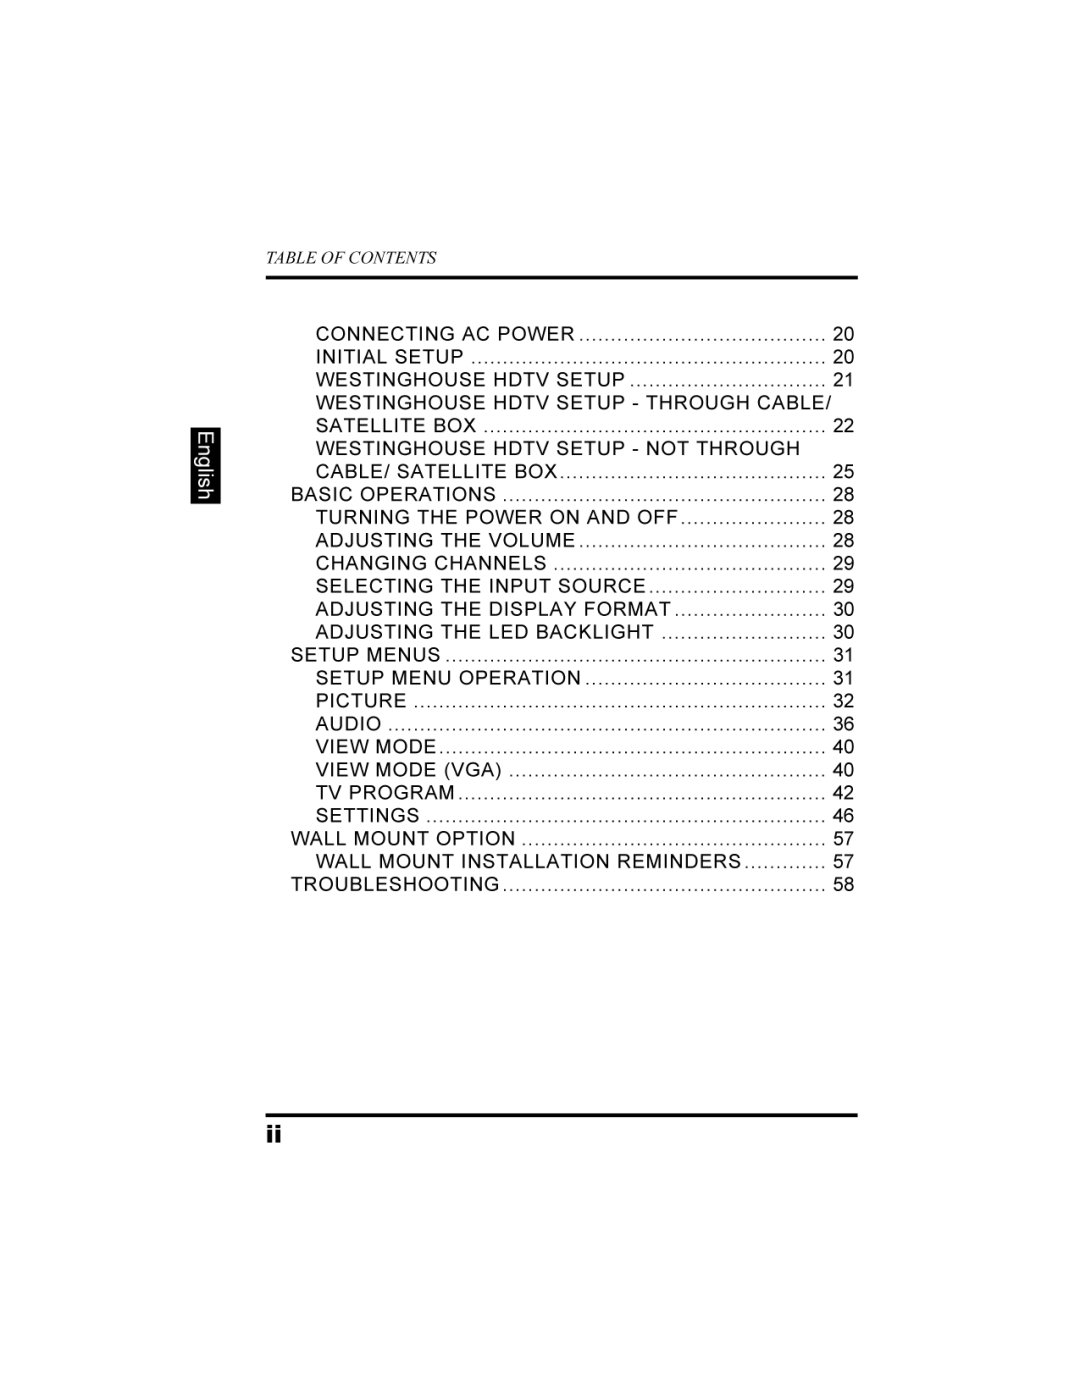 Westinghouse LD-3237 user manual 